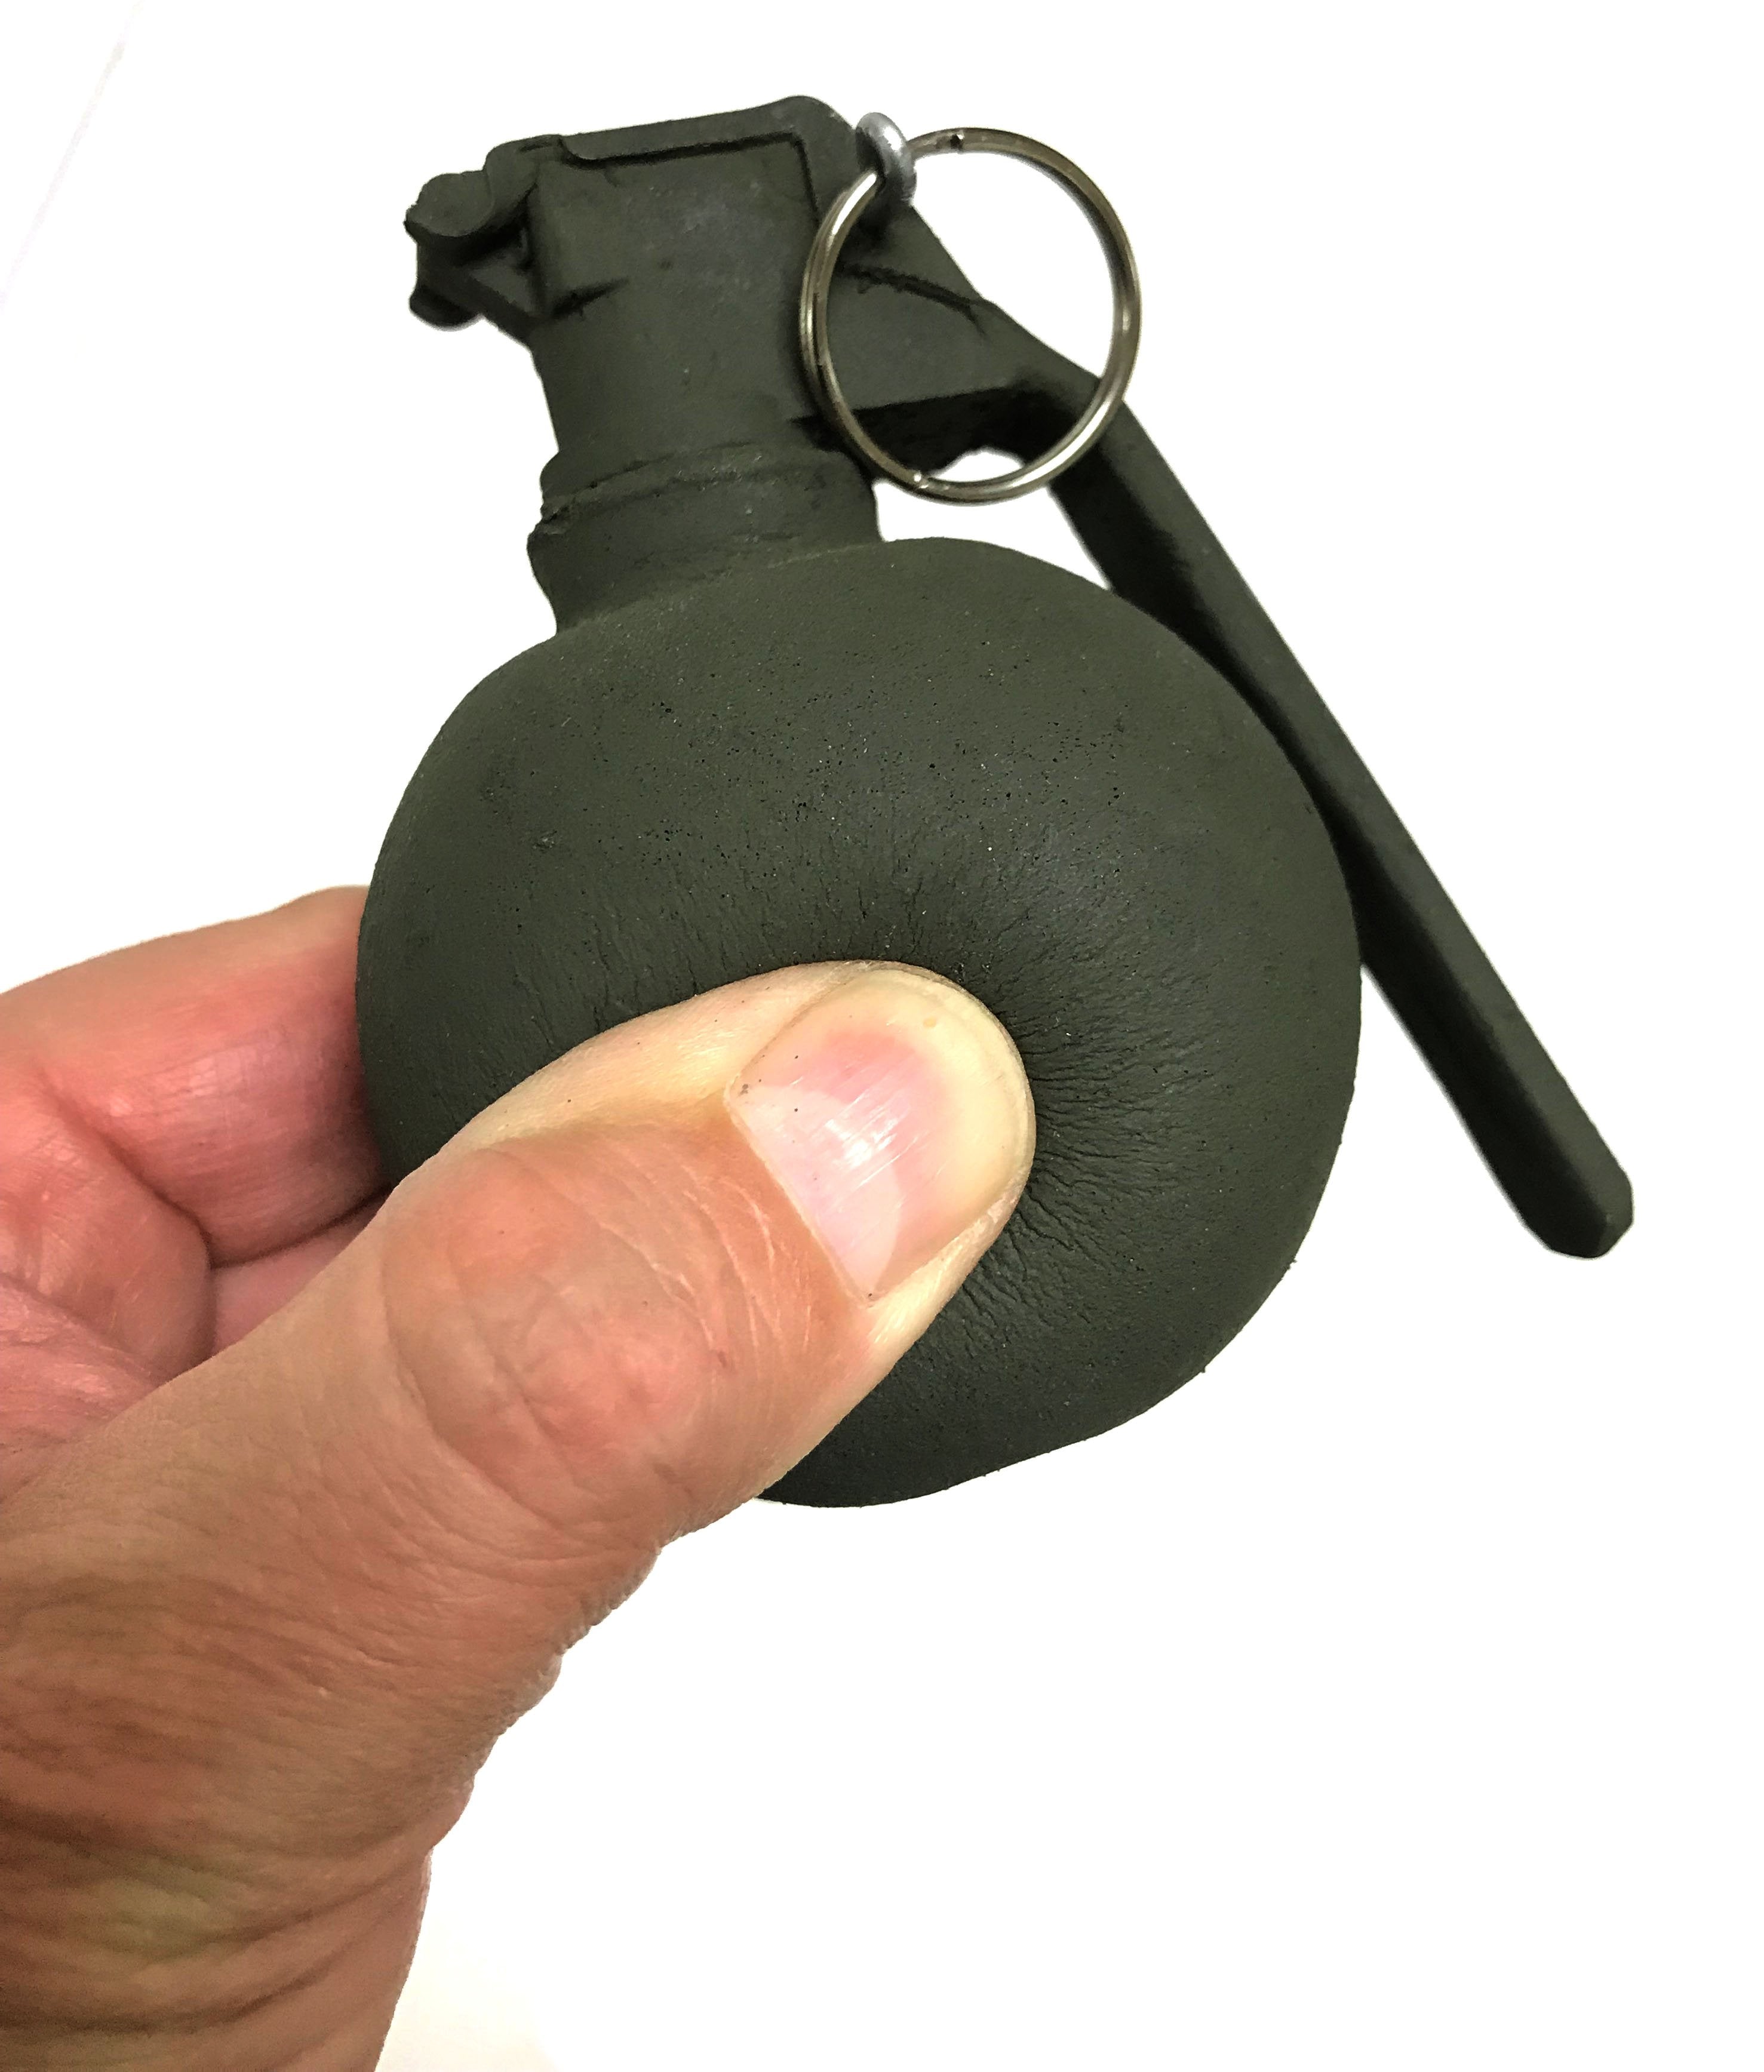 Foam Baseball M67 Fragmentation Hand Grenade Inert Prop with Metal Ring and Pin